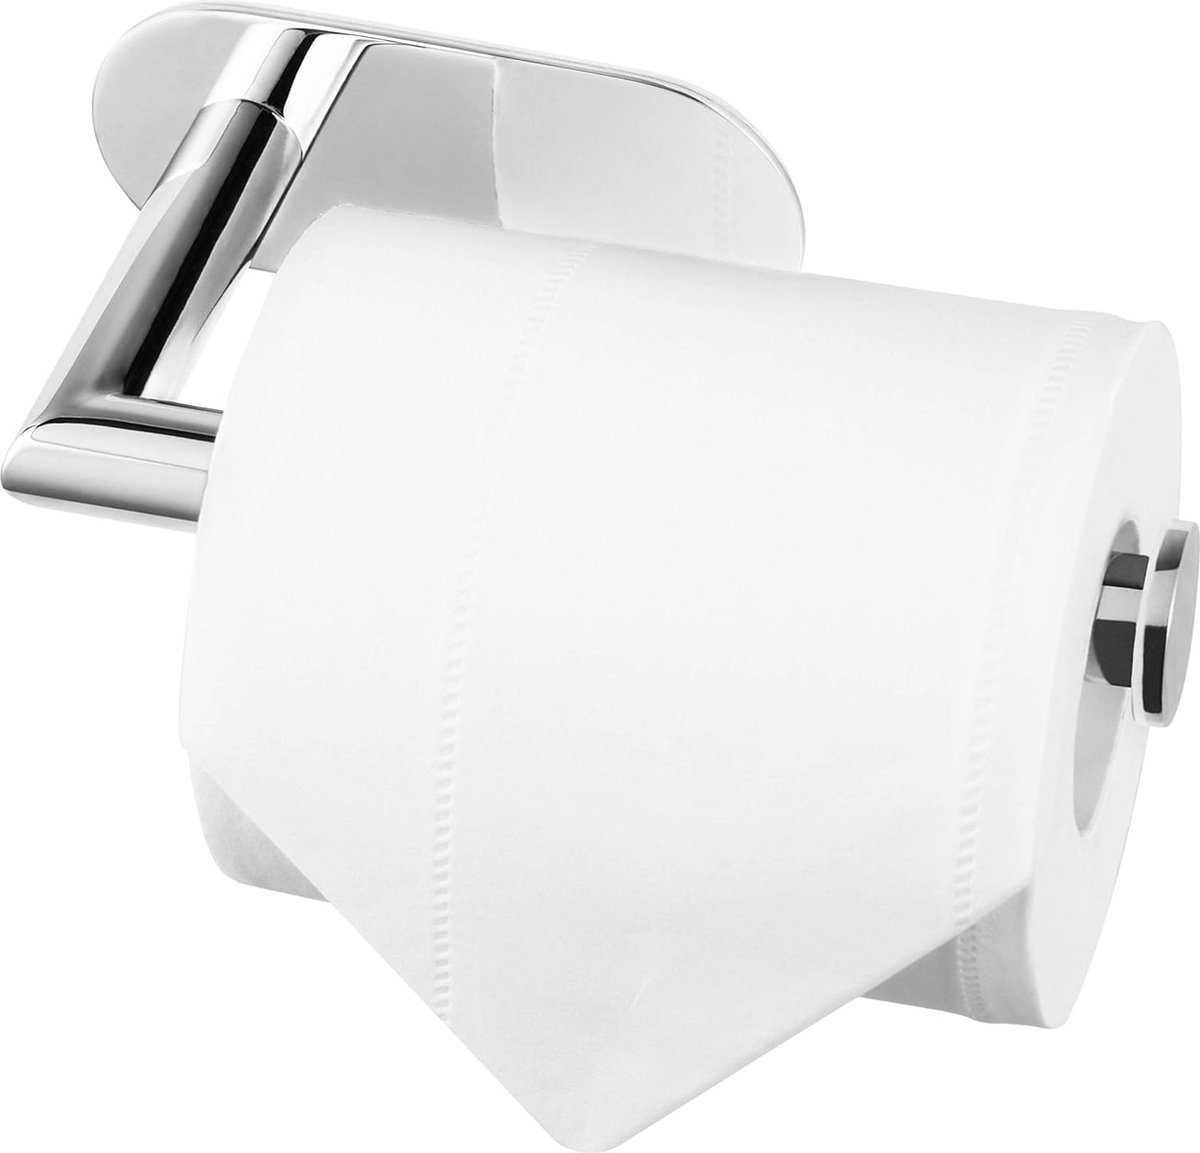 Roestvrij stalen toiletrolhouder - Zilver glimmend - Zonder boren - Toilet of badkamer - Zelfklevend - RVS wc rolhouder - Roestvrij staal